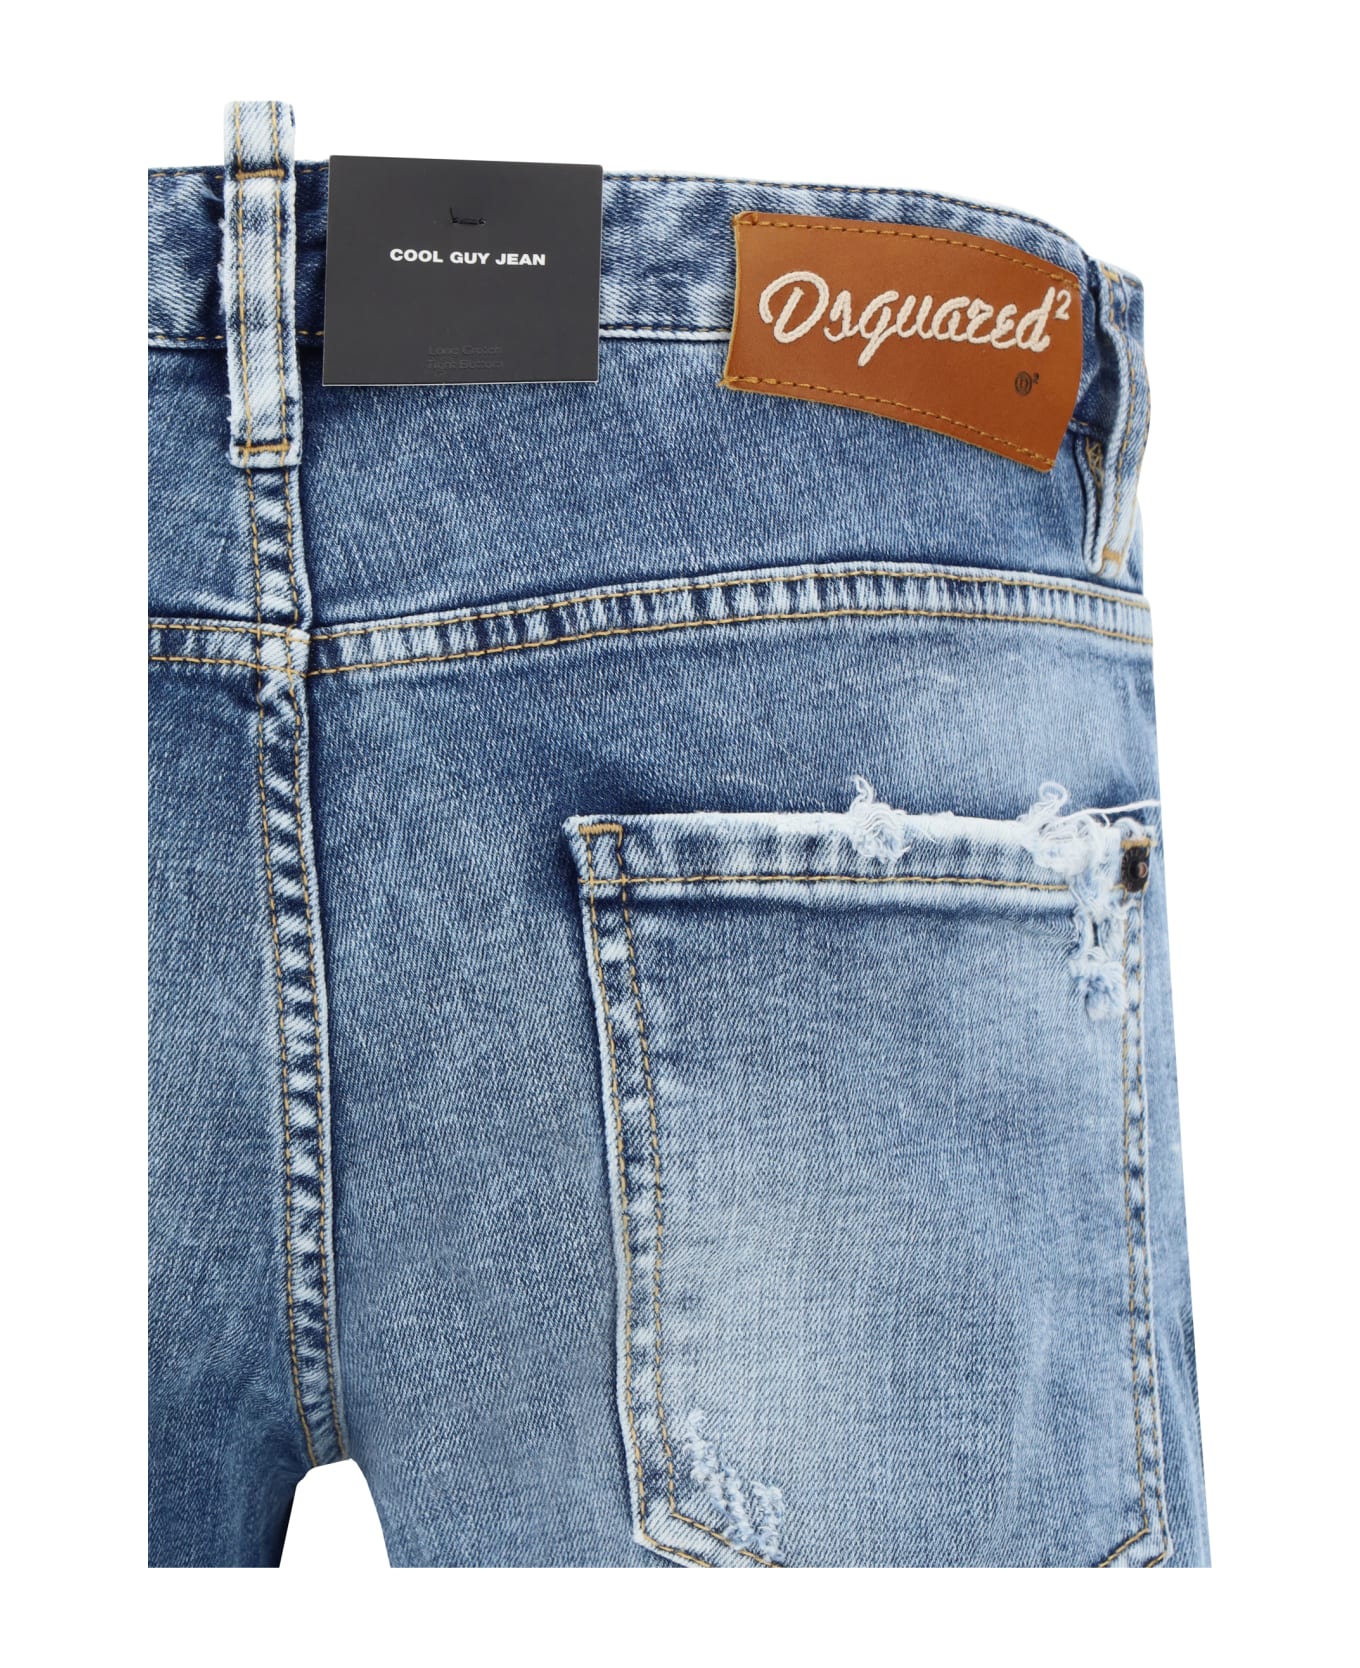 Dsquared2 Cool Guy Denim Jeans - 470